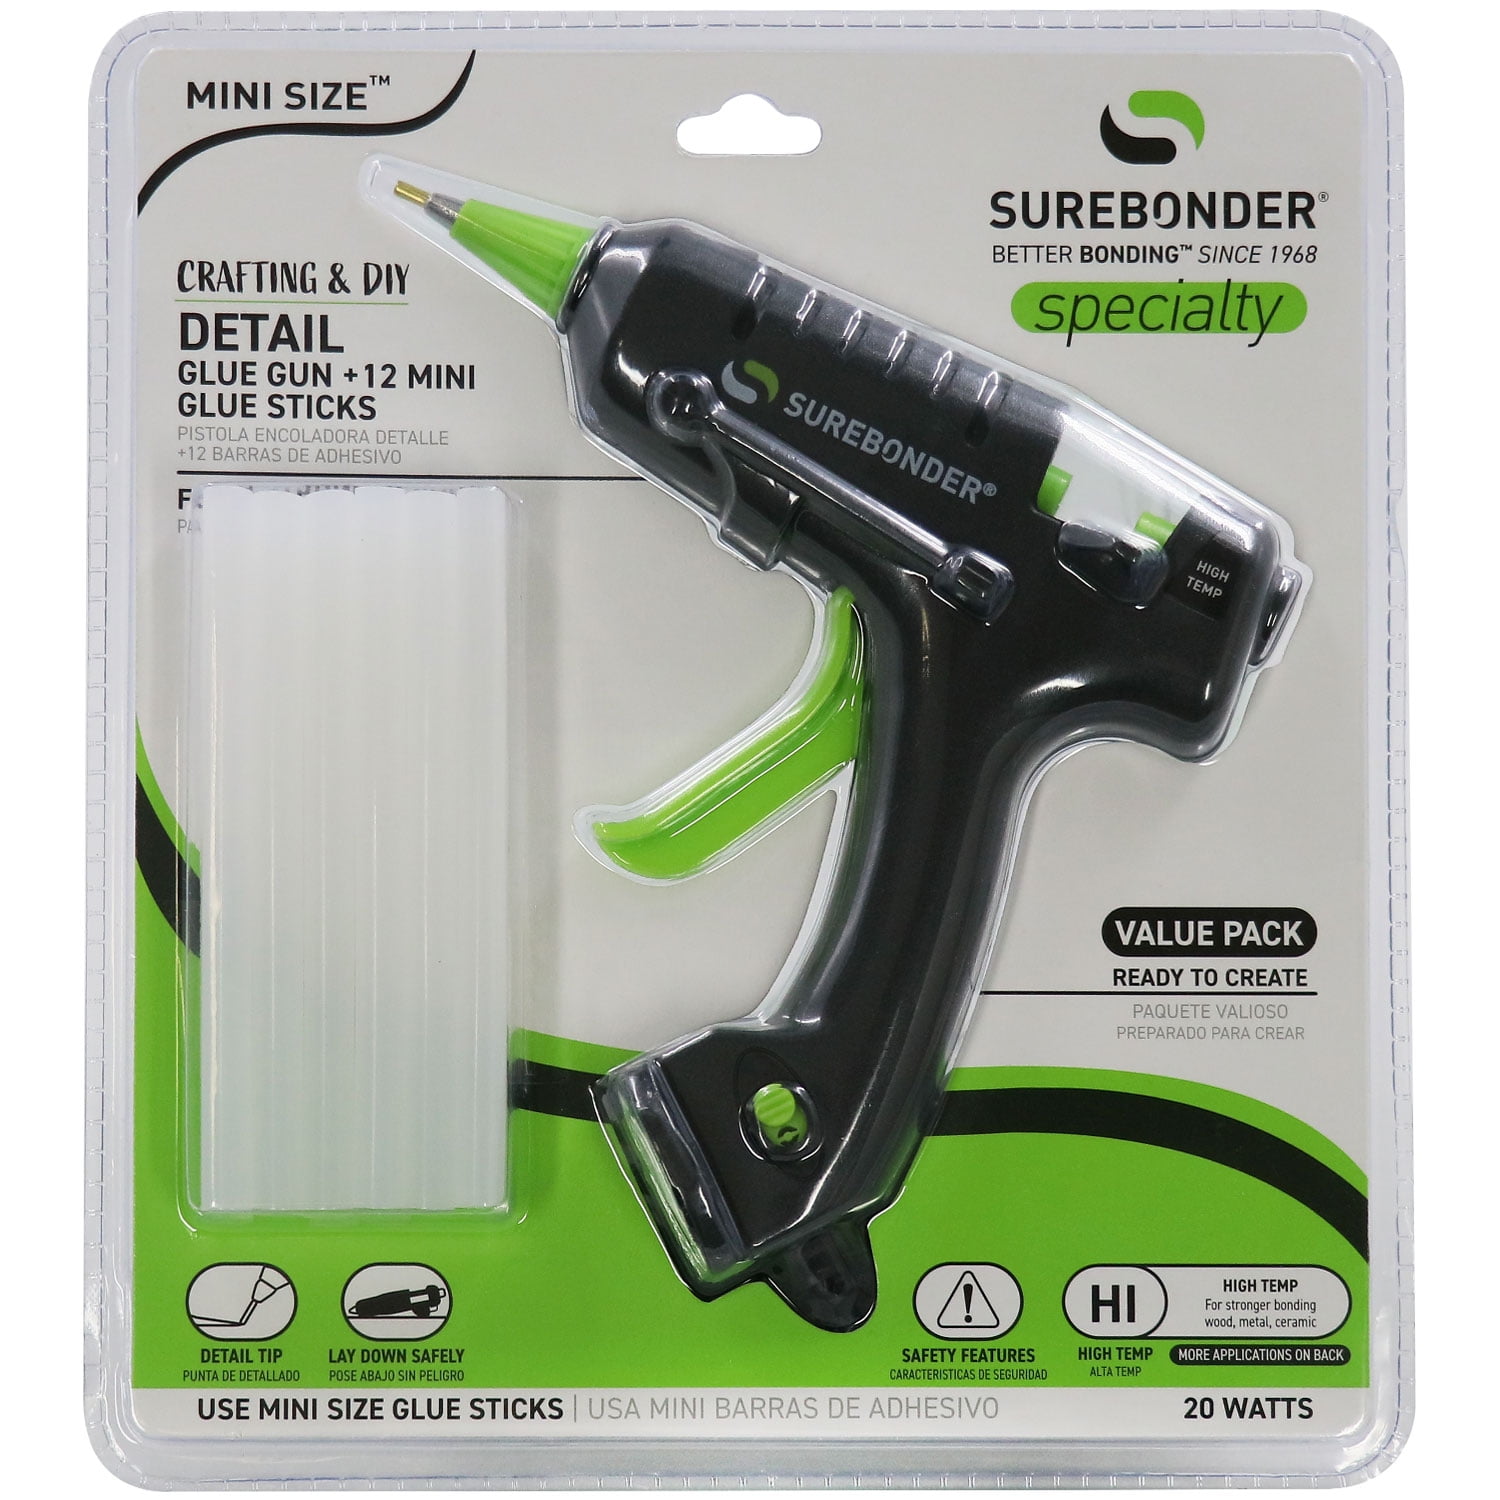 Buy Surebonder Ultra Mini Glue Gun Online at $22 - JL Smith & Co